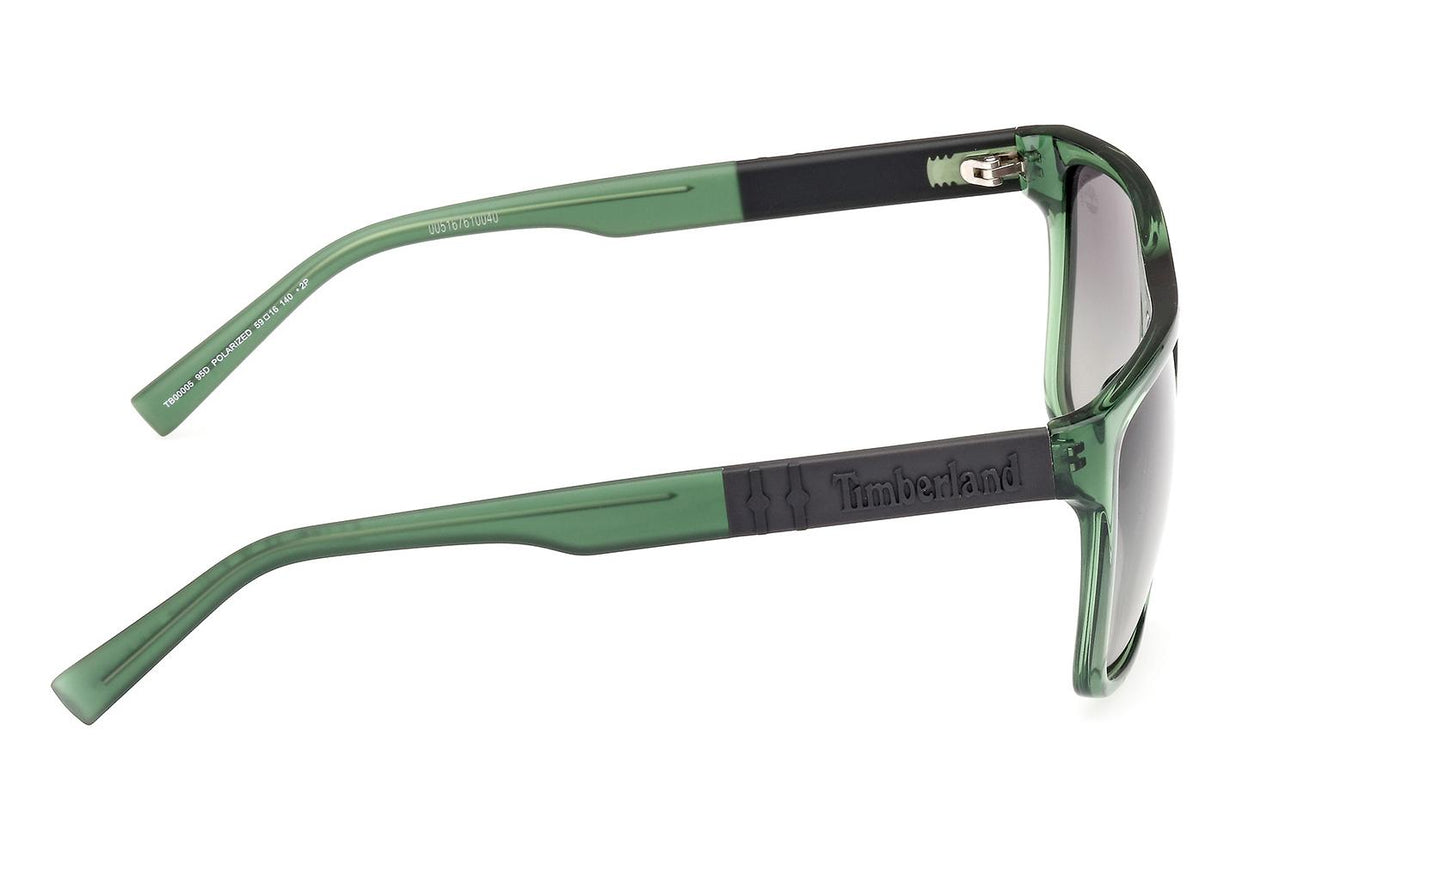 Timberland Sunglasses TB00005 95D